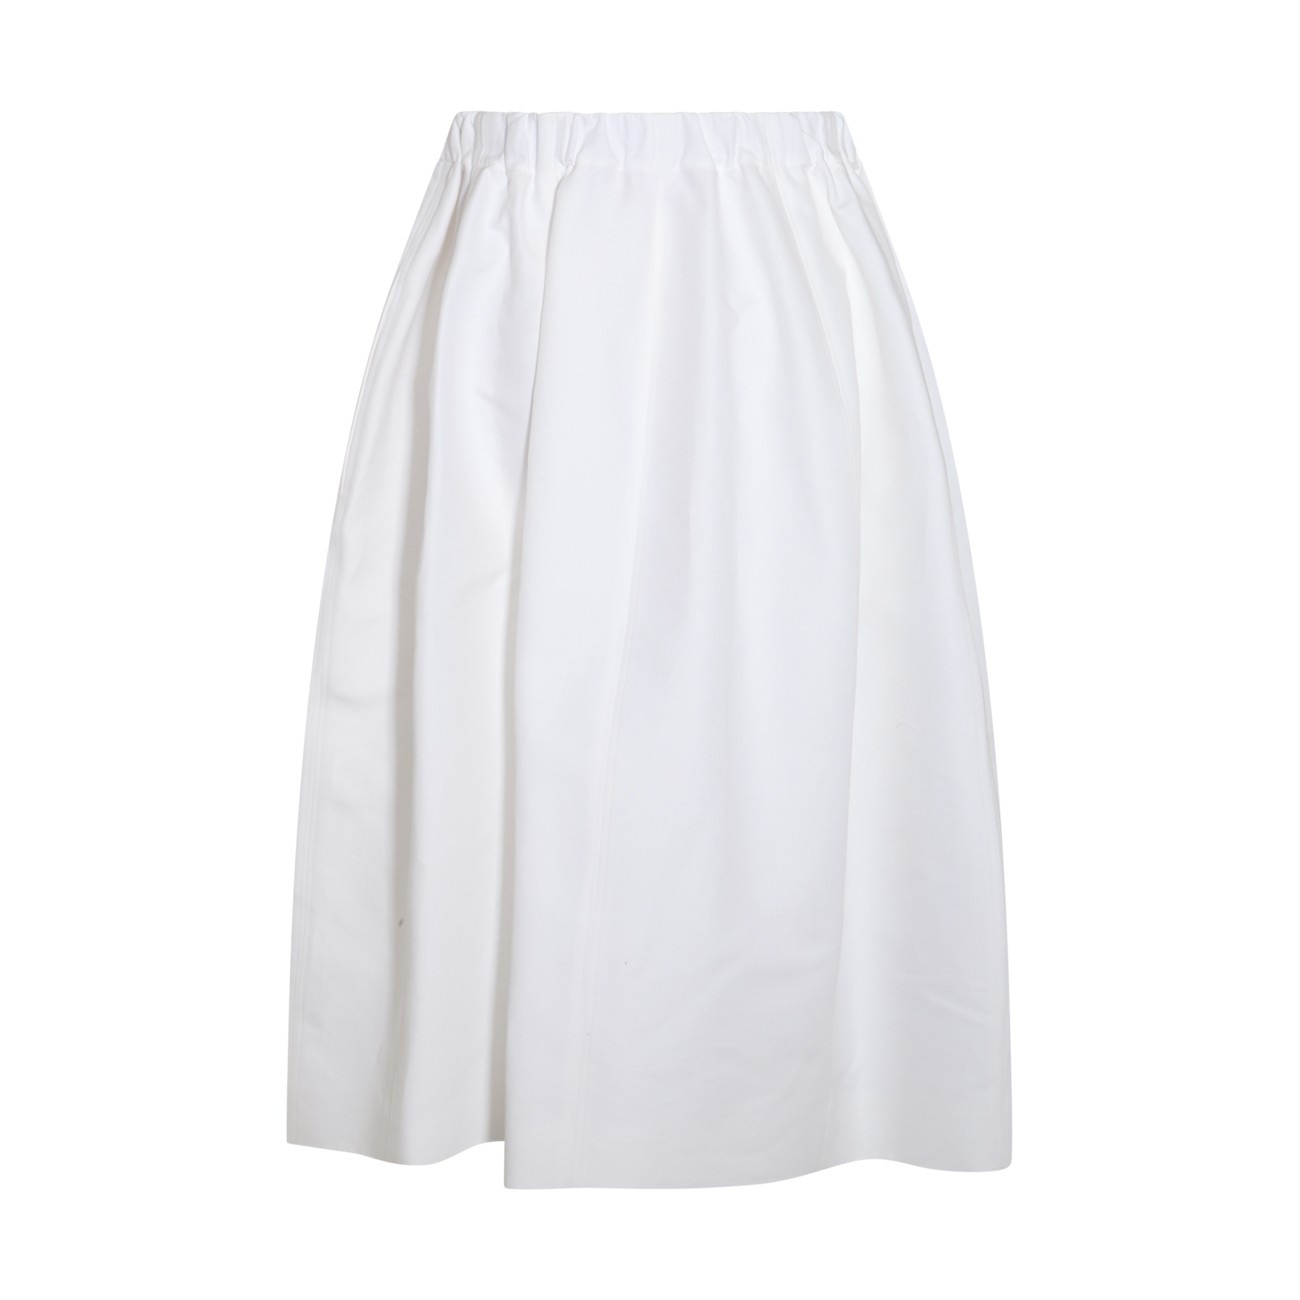 white cotton skirt - 2